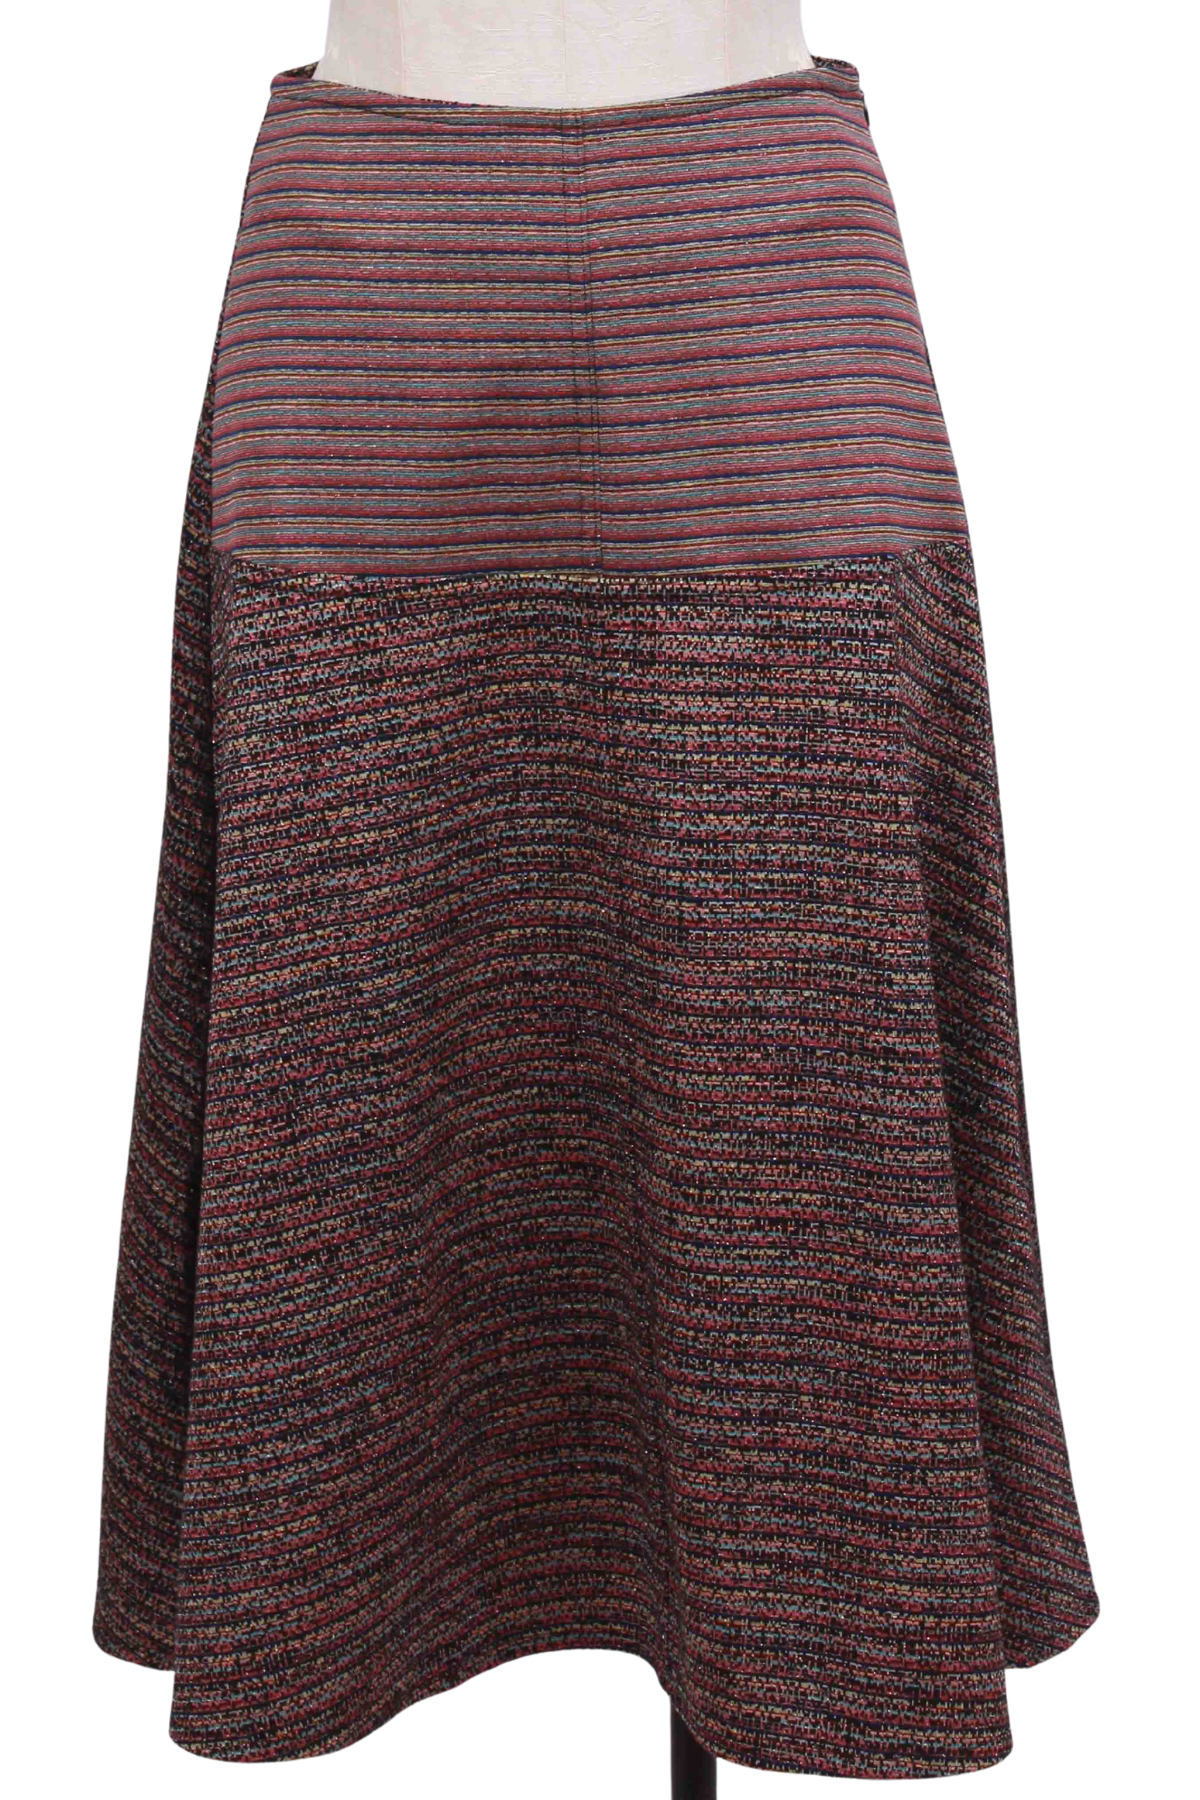 Prado stripe fabric Godet Skirt by Isle by Melis Kozan 